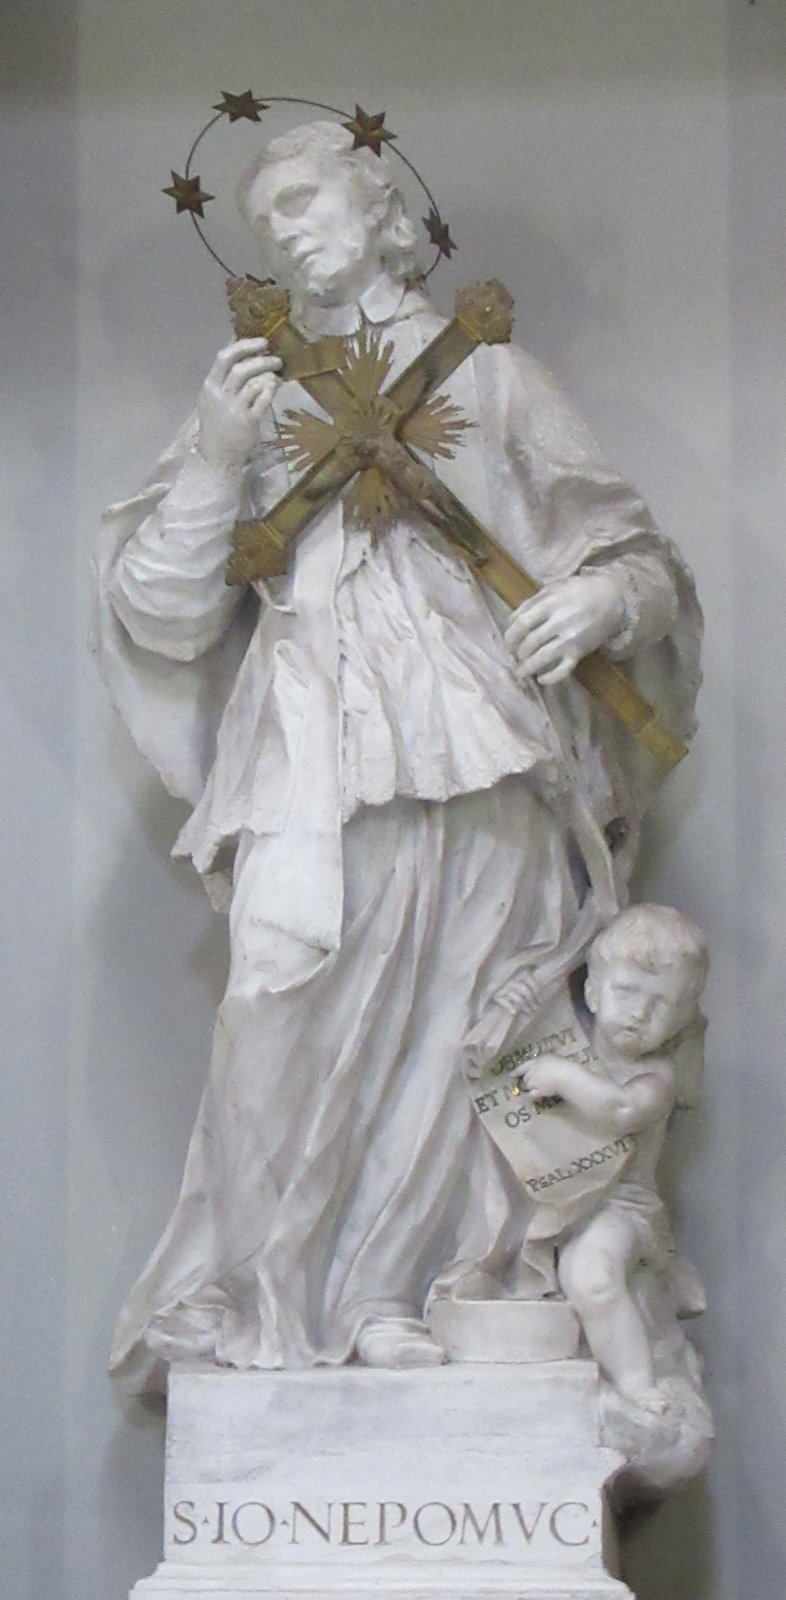 Giovanni Altobelli: Statue, 18. Jahrhundert, in der Kirche San Lorenzo in Lucina in Rom